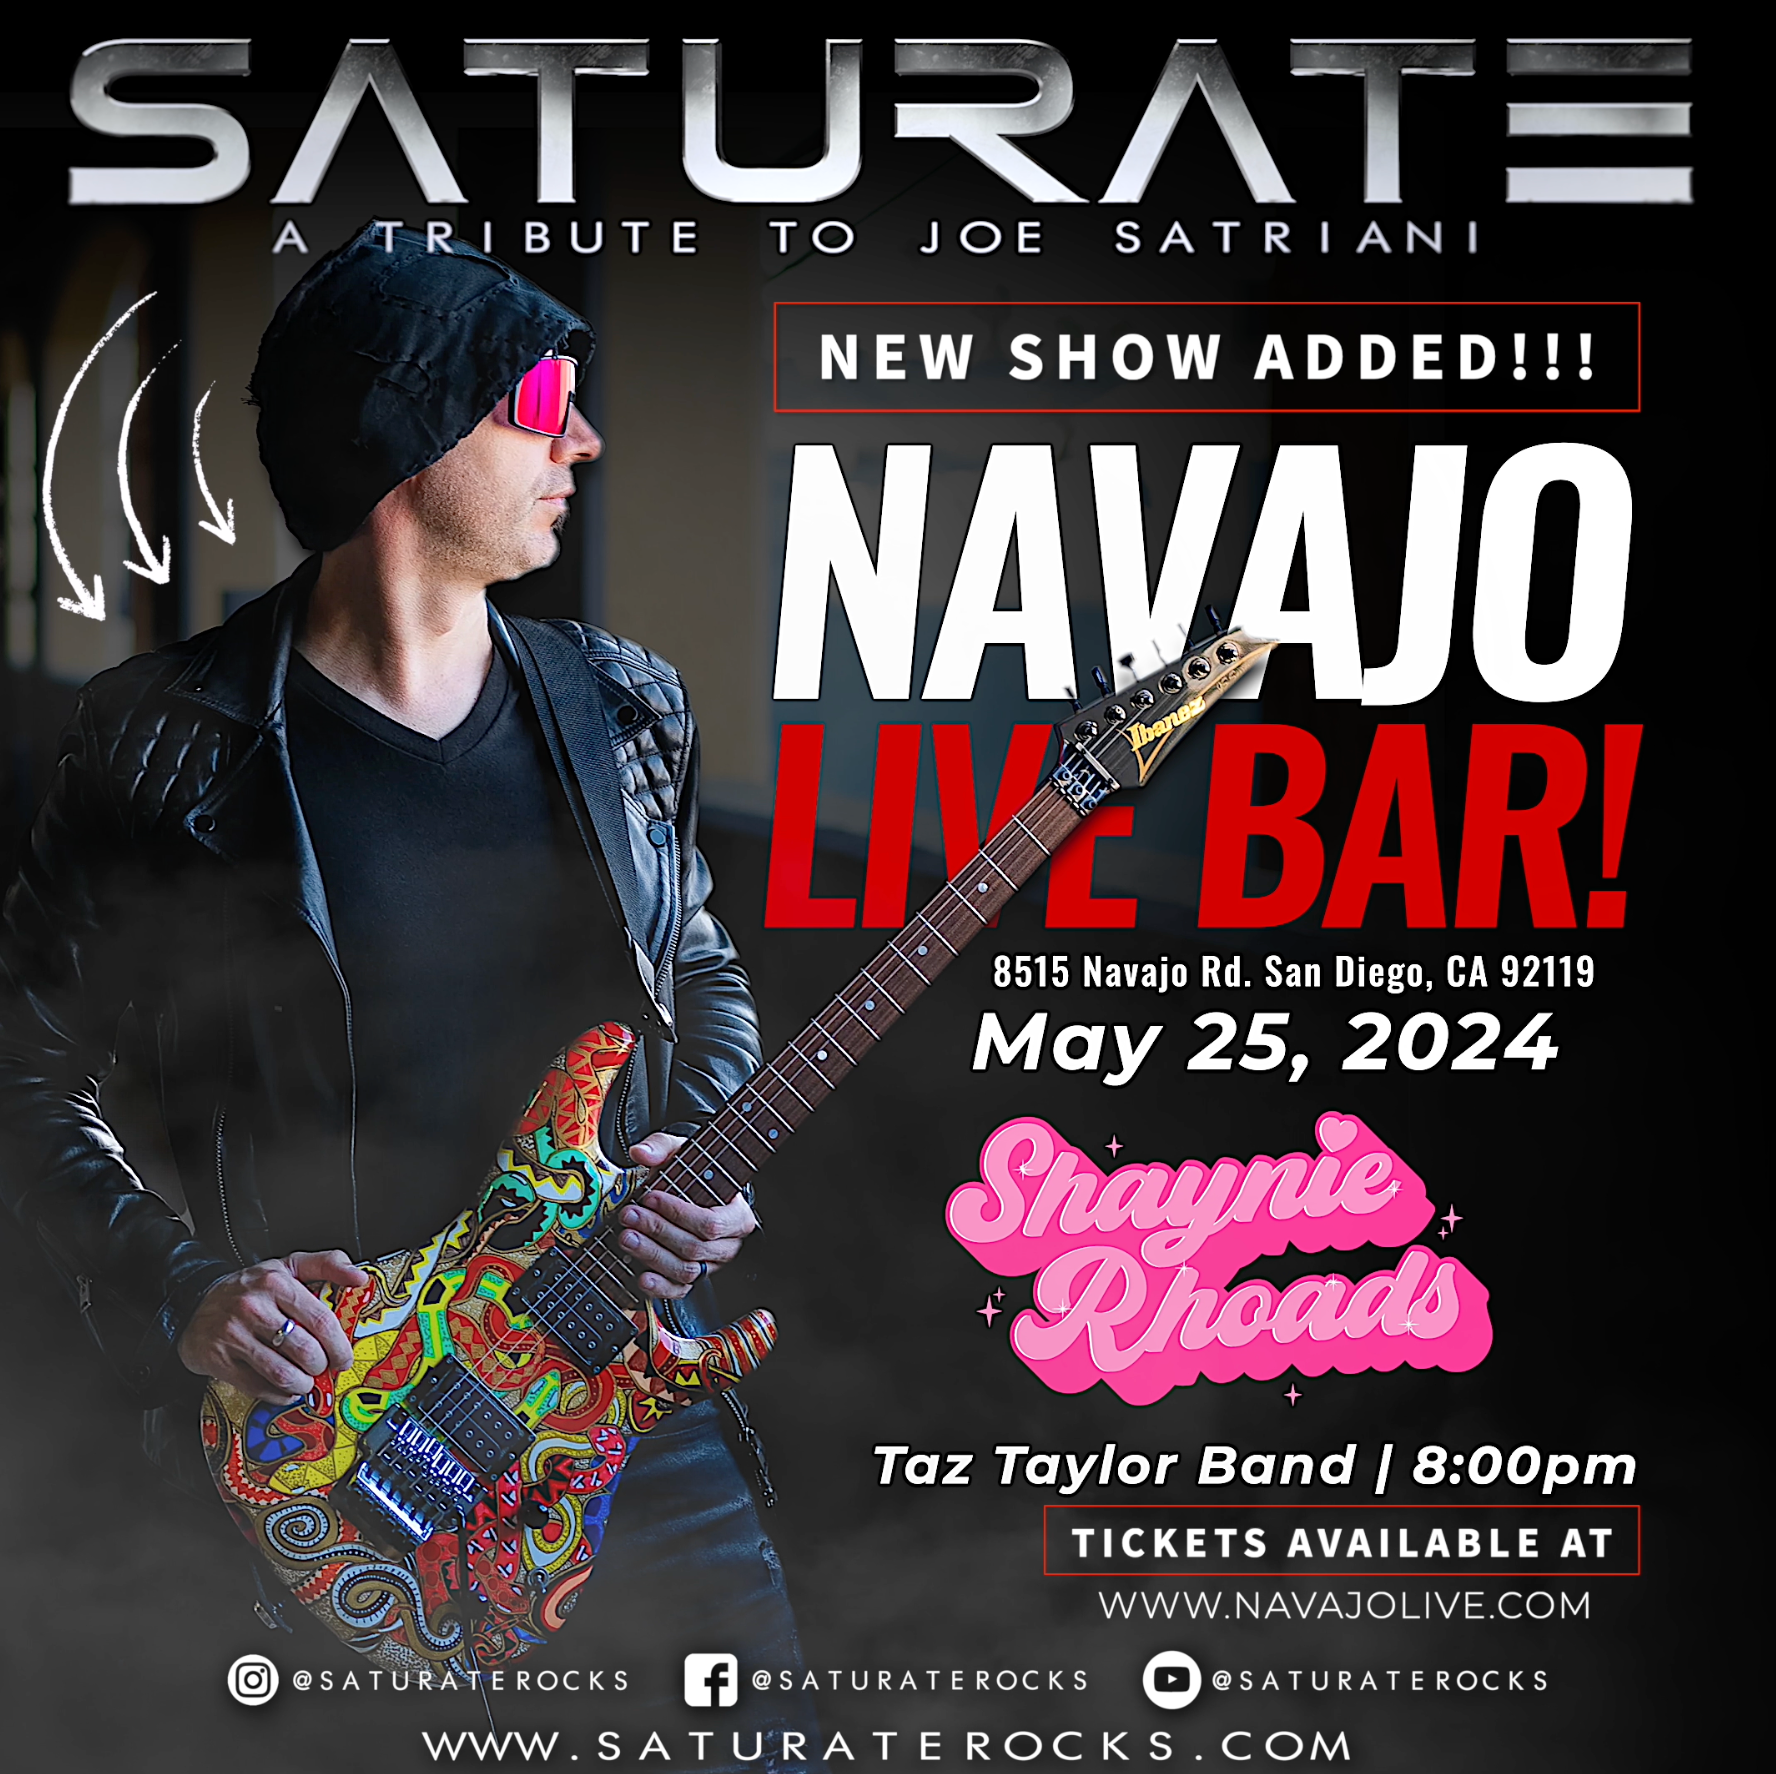 05.25.24 - SATURATE will be performing@ Navajo Live Bar